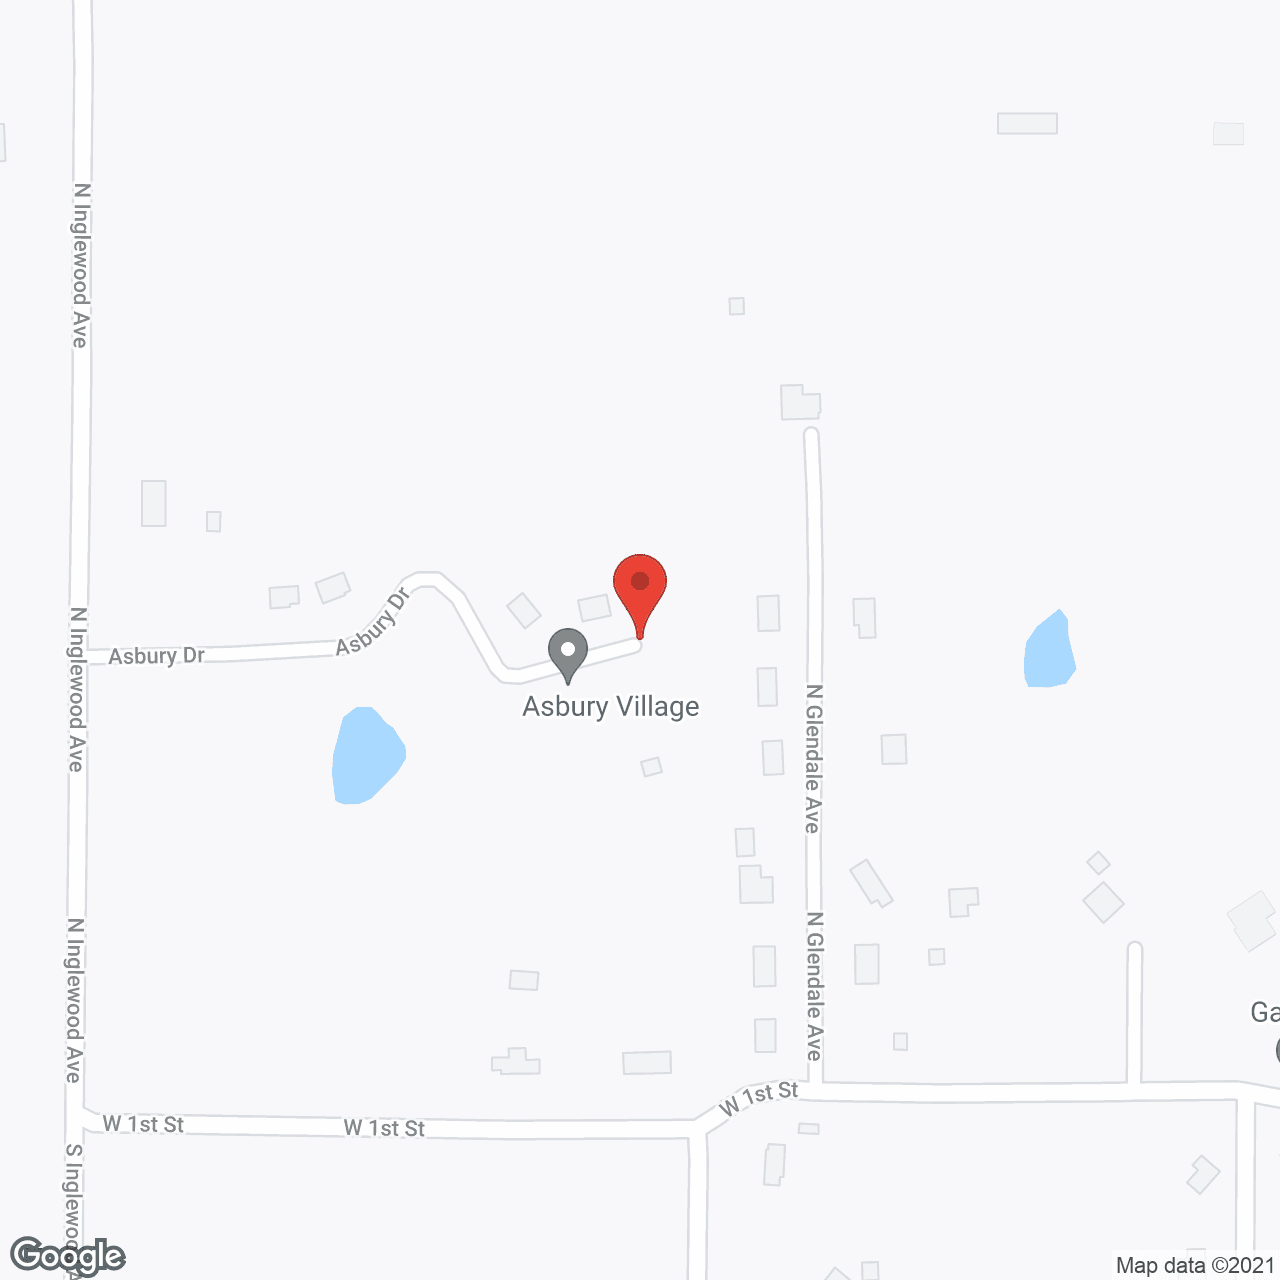 Asbury Village in google map